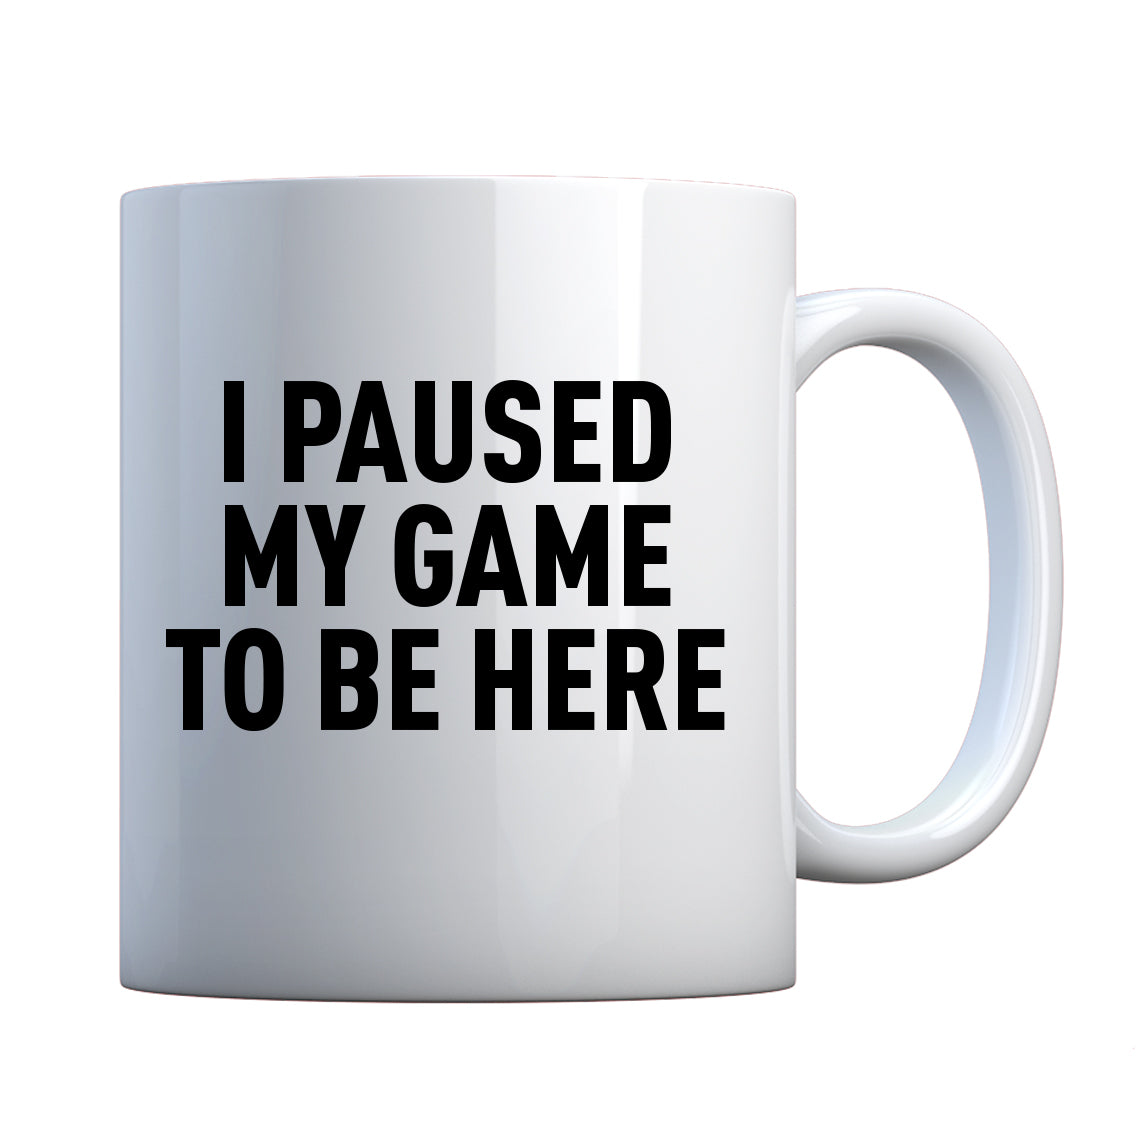 I Paused My Game to Be Here Ceramic Gift Mug